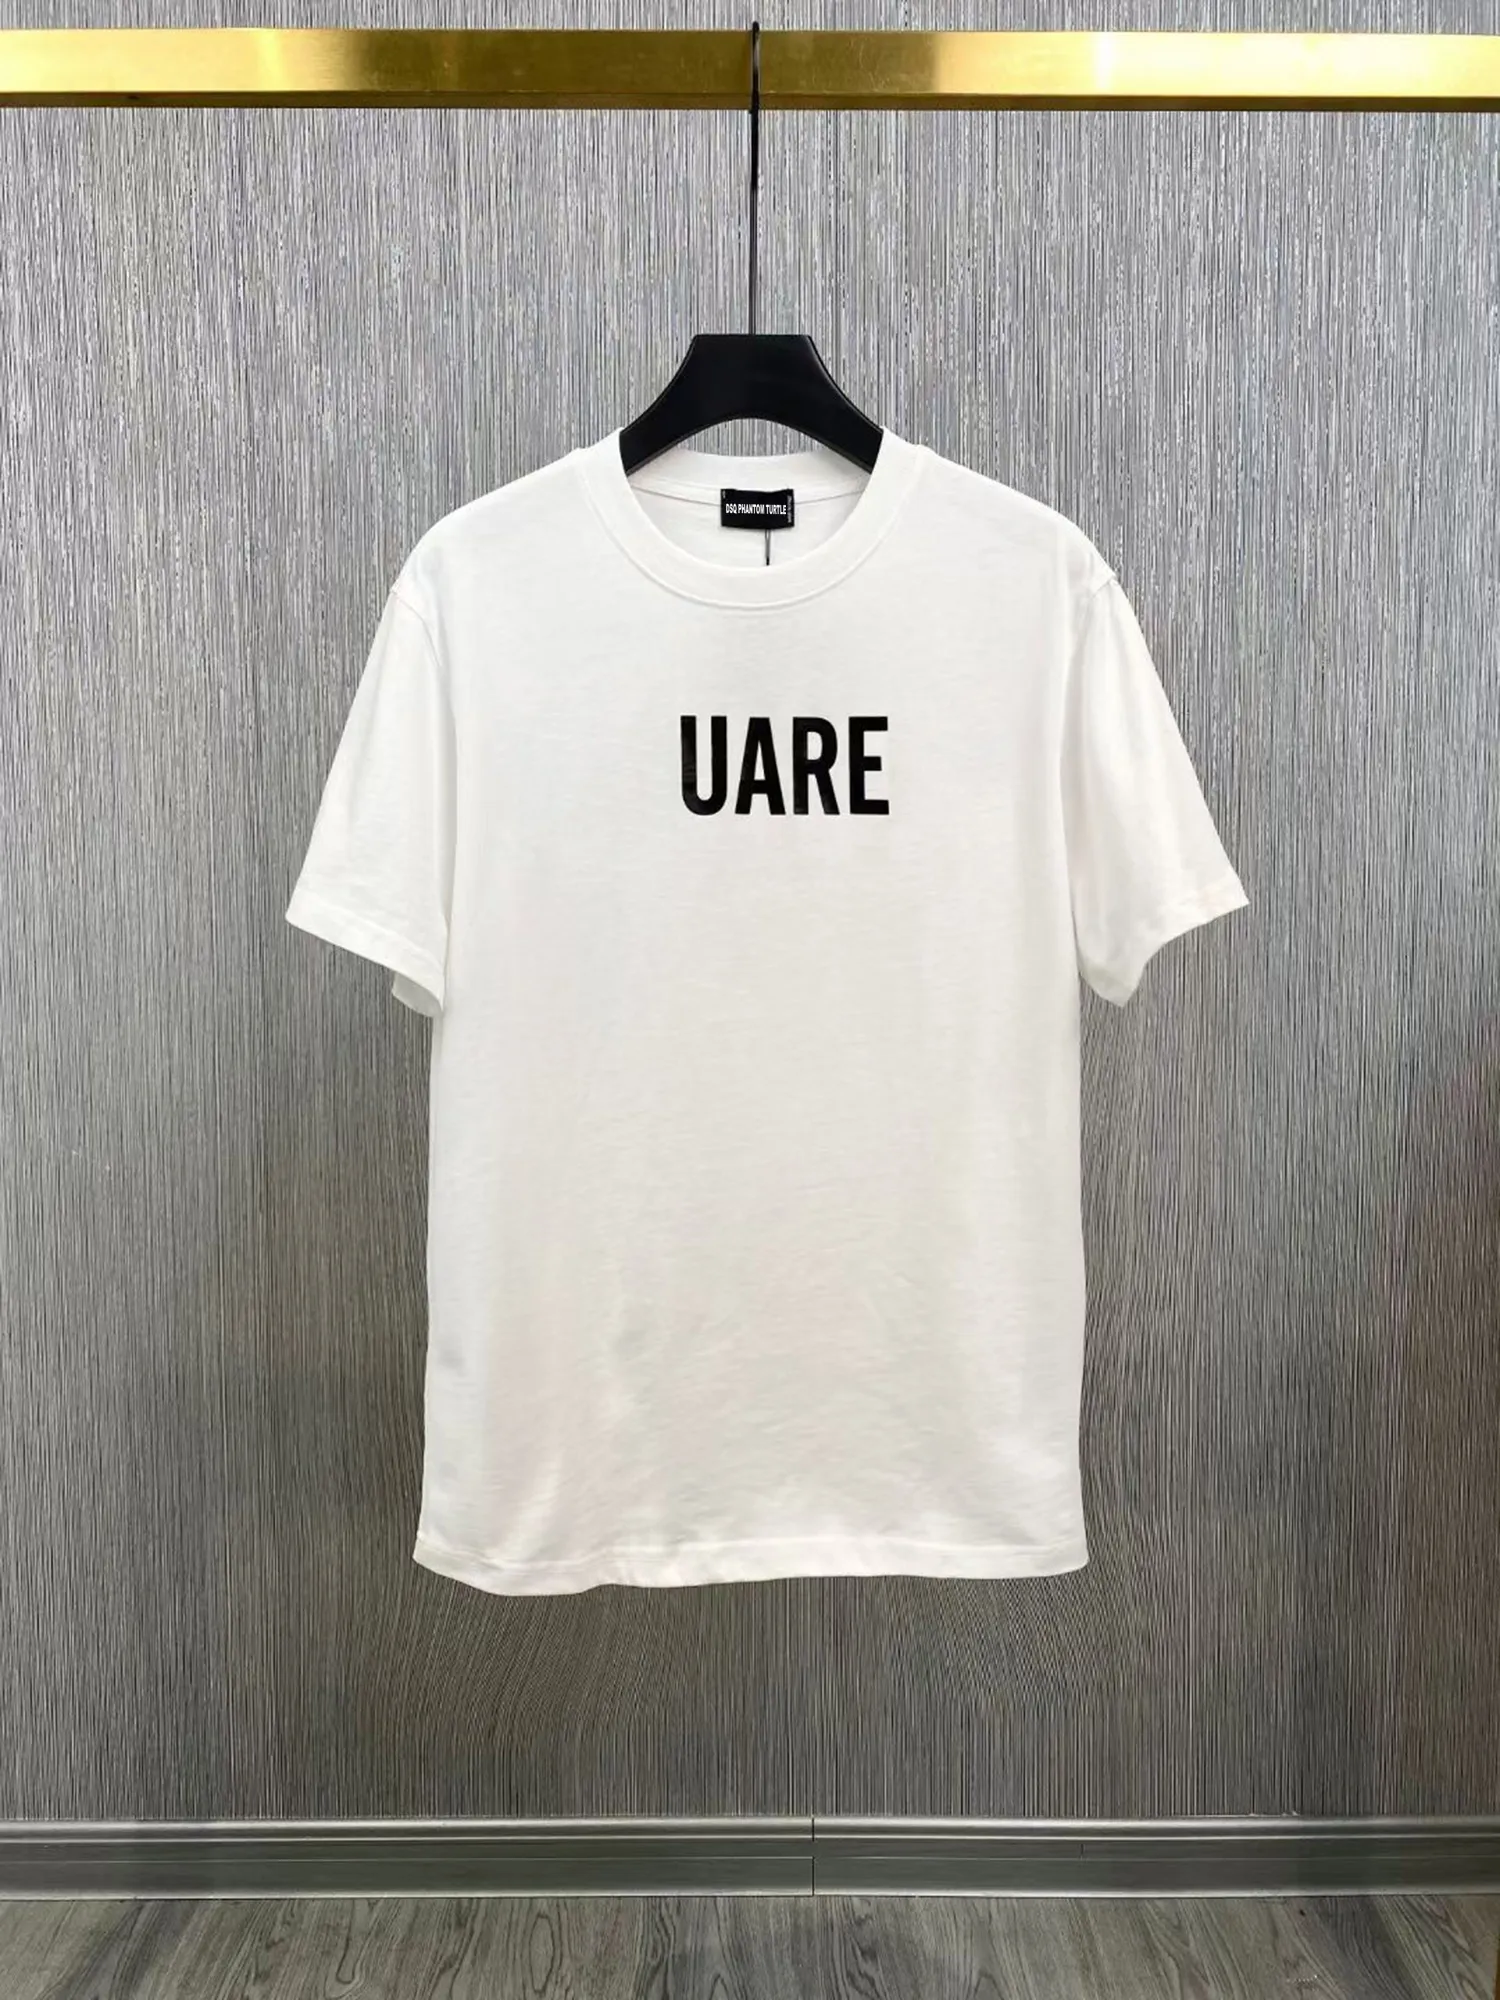 DSQ PHANTOM TURTLE Men's T-Shirts Mens Designer T Shirts Black White Cool T-shirt Men Summer Fashion Casual Street T-shirt Tops Plus Size M-XXXL 68822